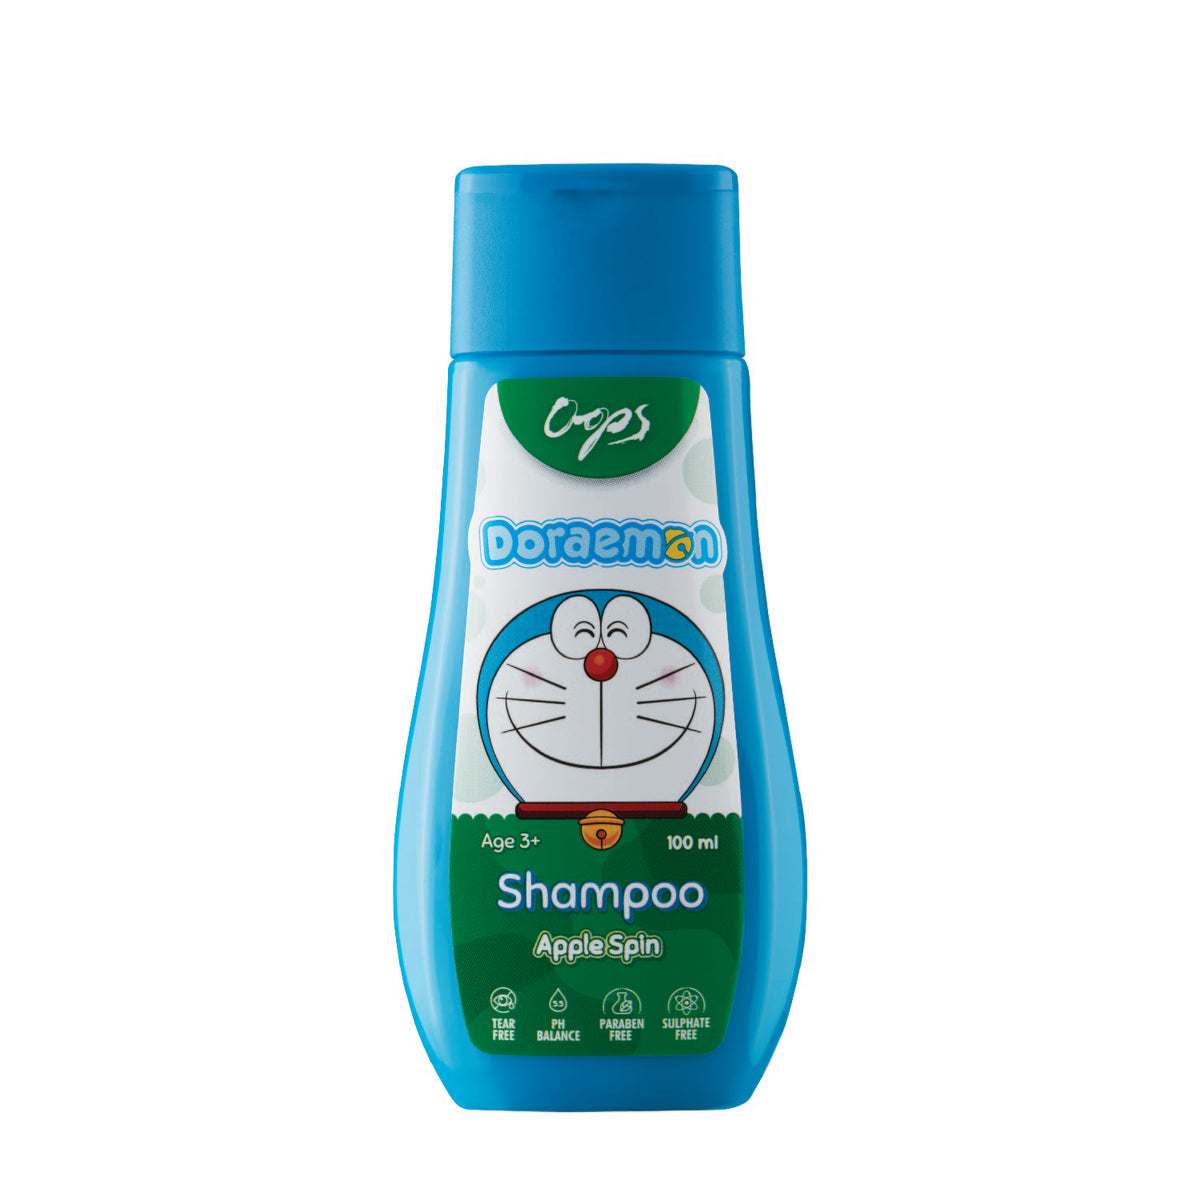 Oops Doraemon Shampoo - Apple Spin, 100ml : Buy 1 Get 1 Free! Gardenia Cosmotrade LLP